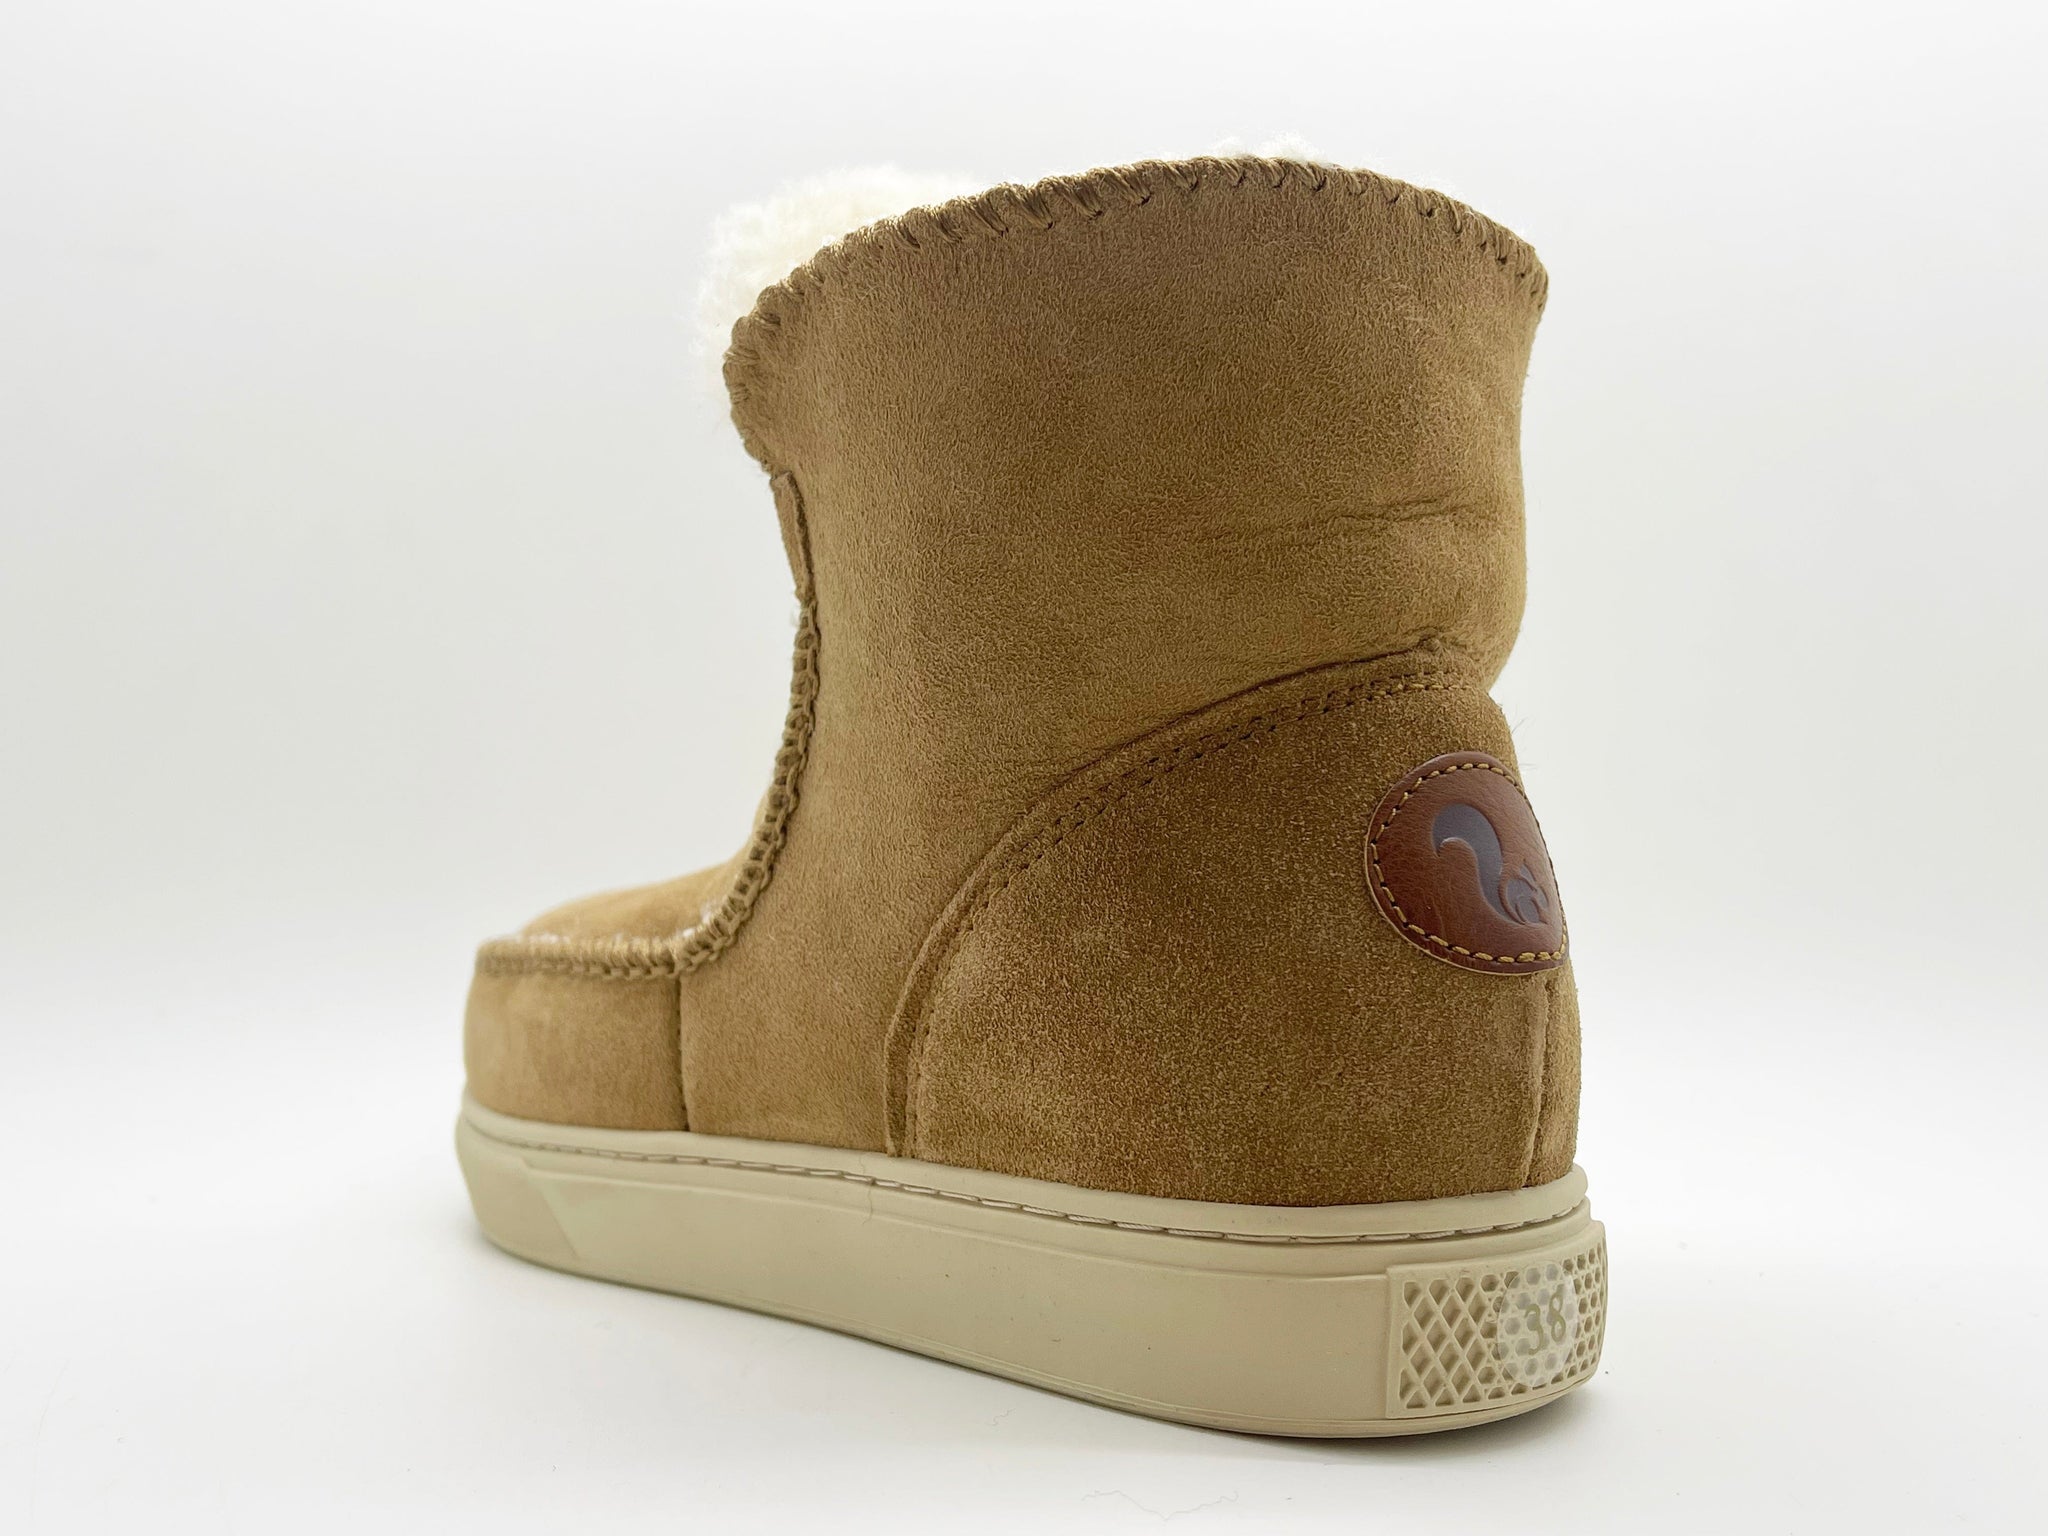 NAT 2 calzado thies 1856 ® Sneakerboot 2 cashew (W) moda sostenible moda ética